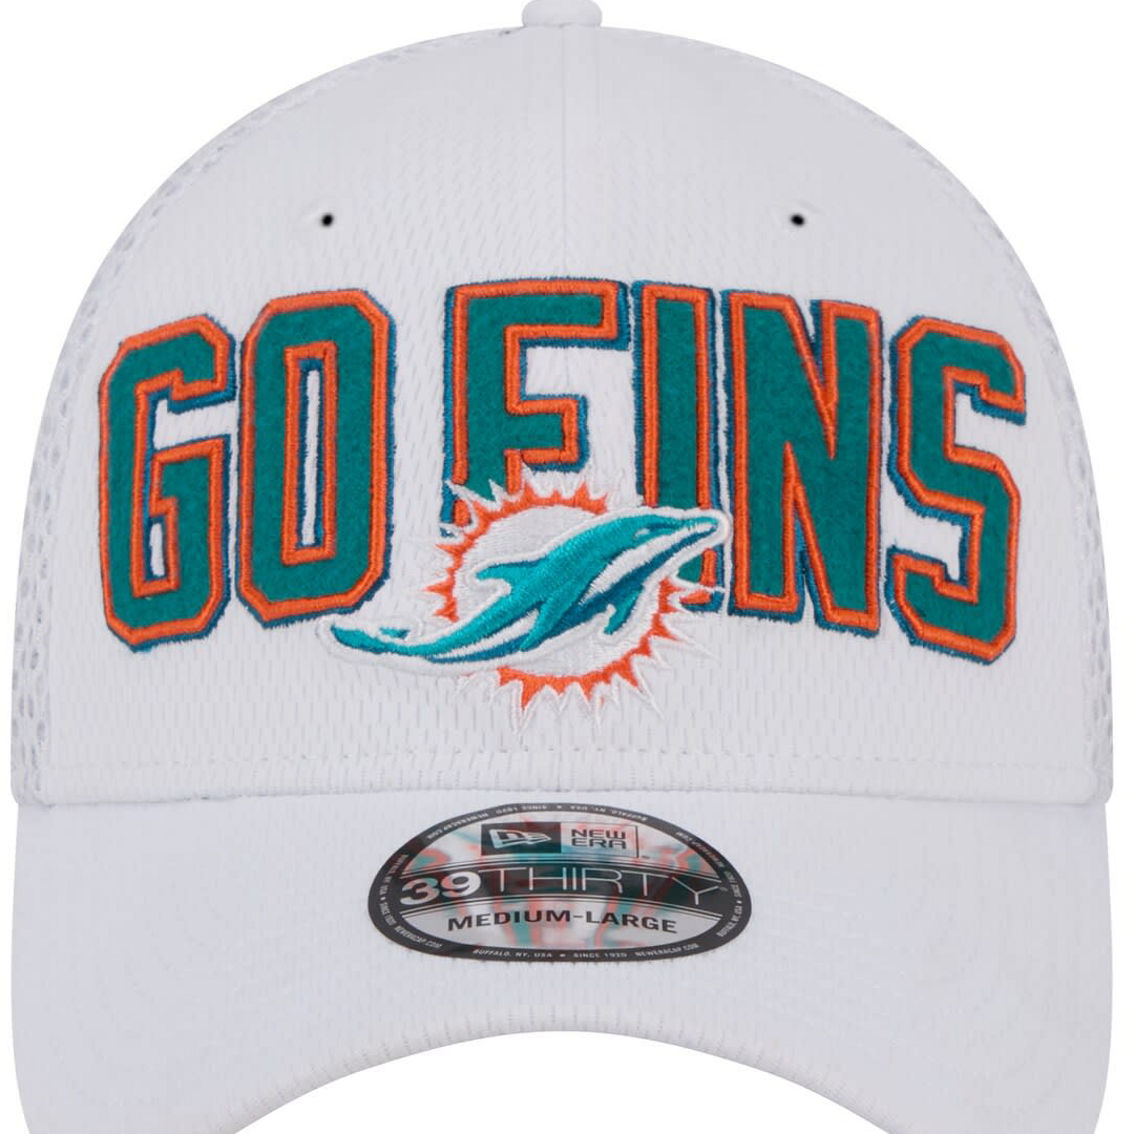 New Era Men's White Miami Dolphins Breakers 39THIRTY Flex Hat - Image 3 of 4